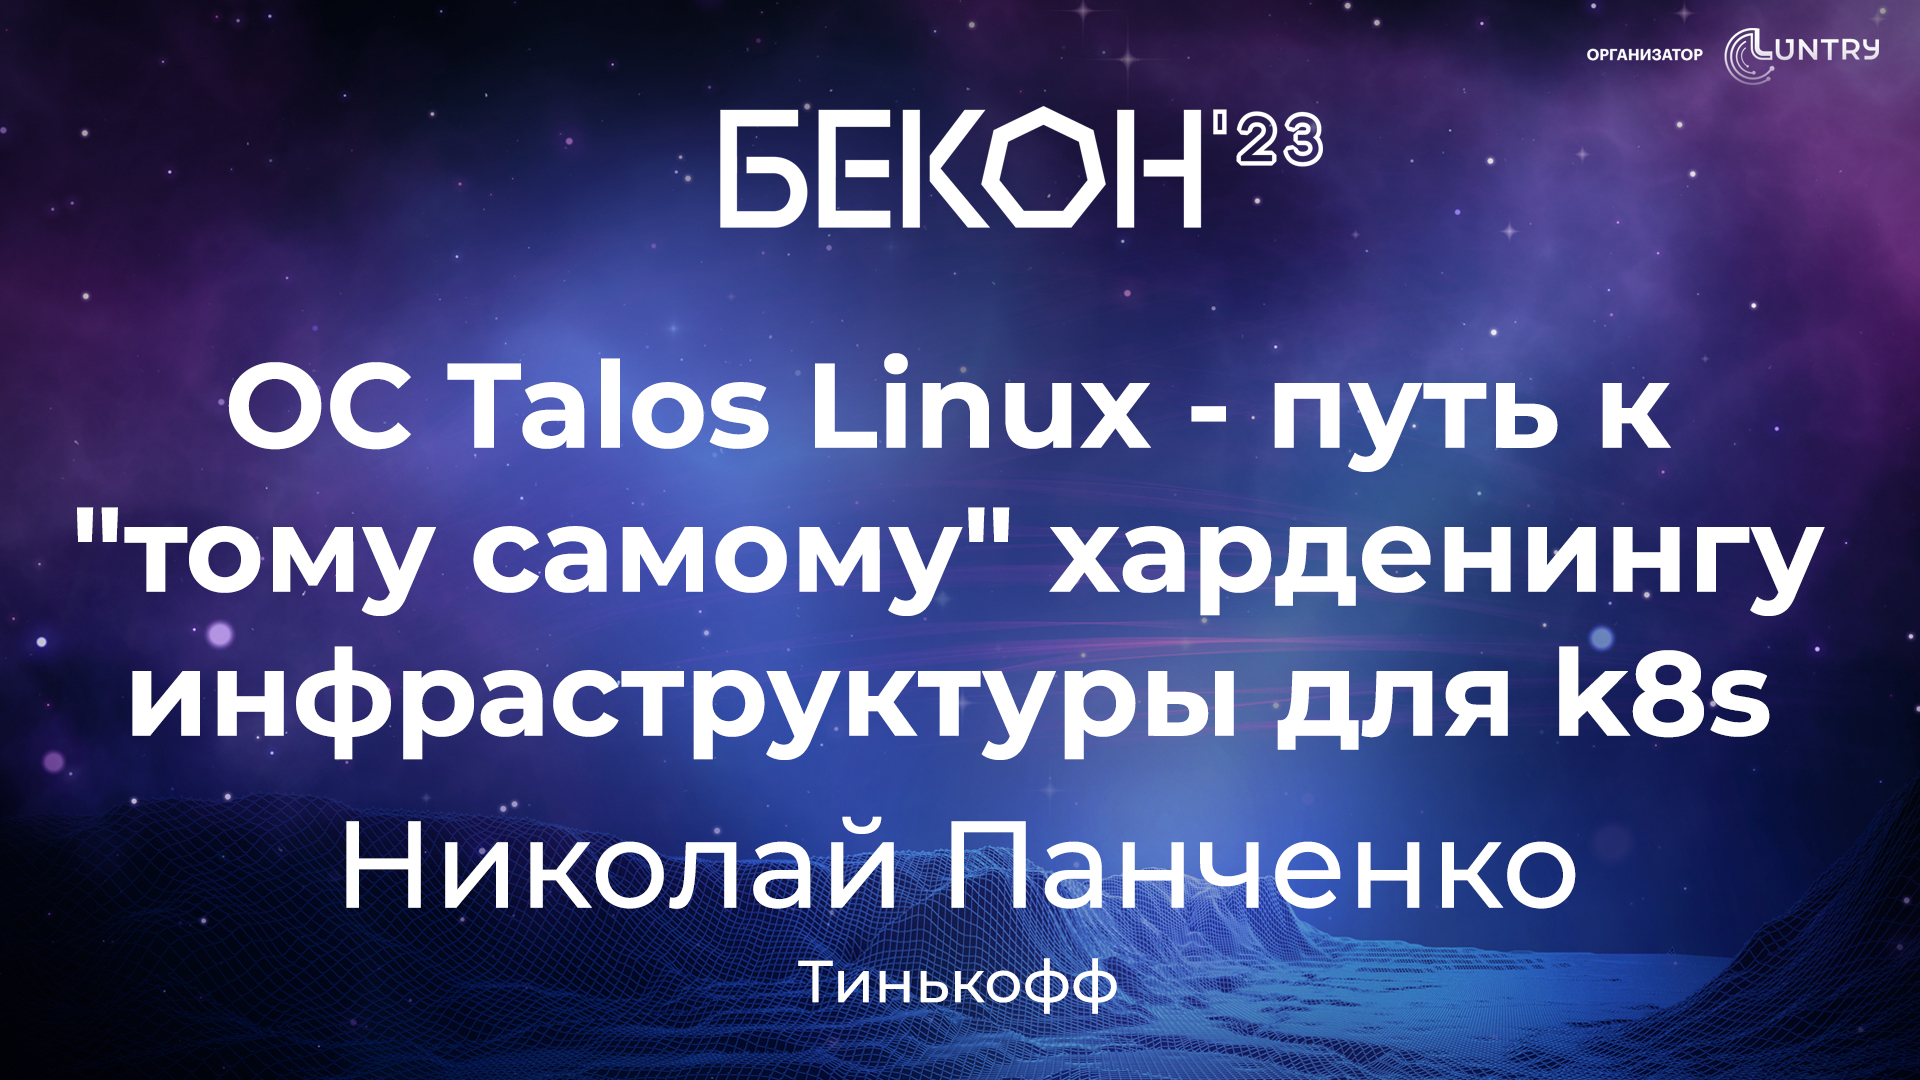 Доклад “ОС Talos Linux — путь к «тому самому» харденингу инфраструктуры для k8s”, конференция БеКон